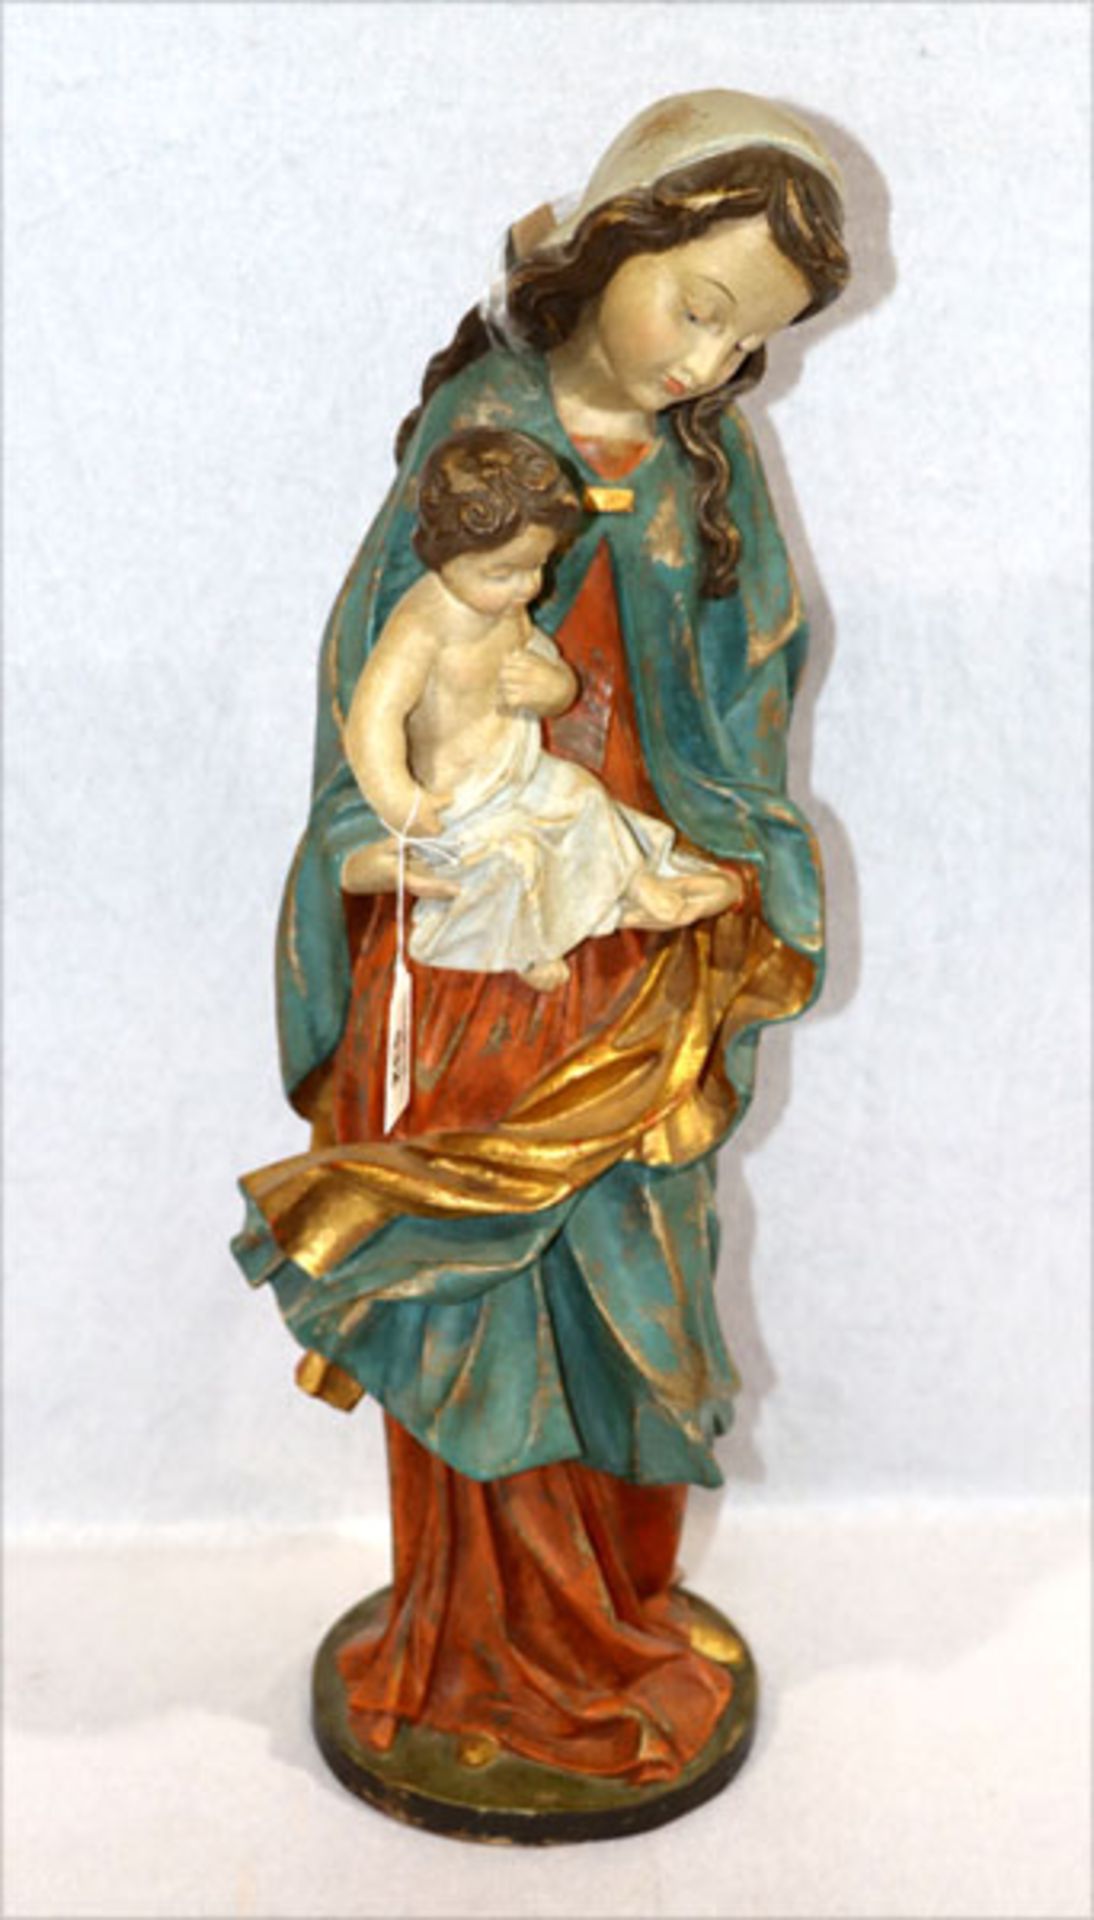 Holz Figurenskulptur 'Maria mit Kind', farbig gefaßt, Sockel Rückseite beschädigt, H 57 cm, B 22 cm,